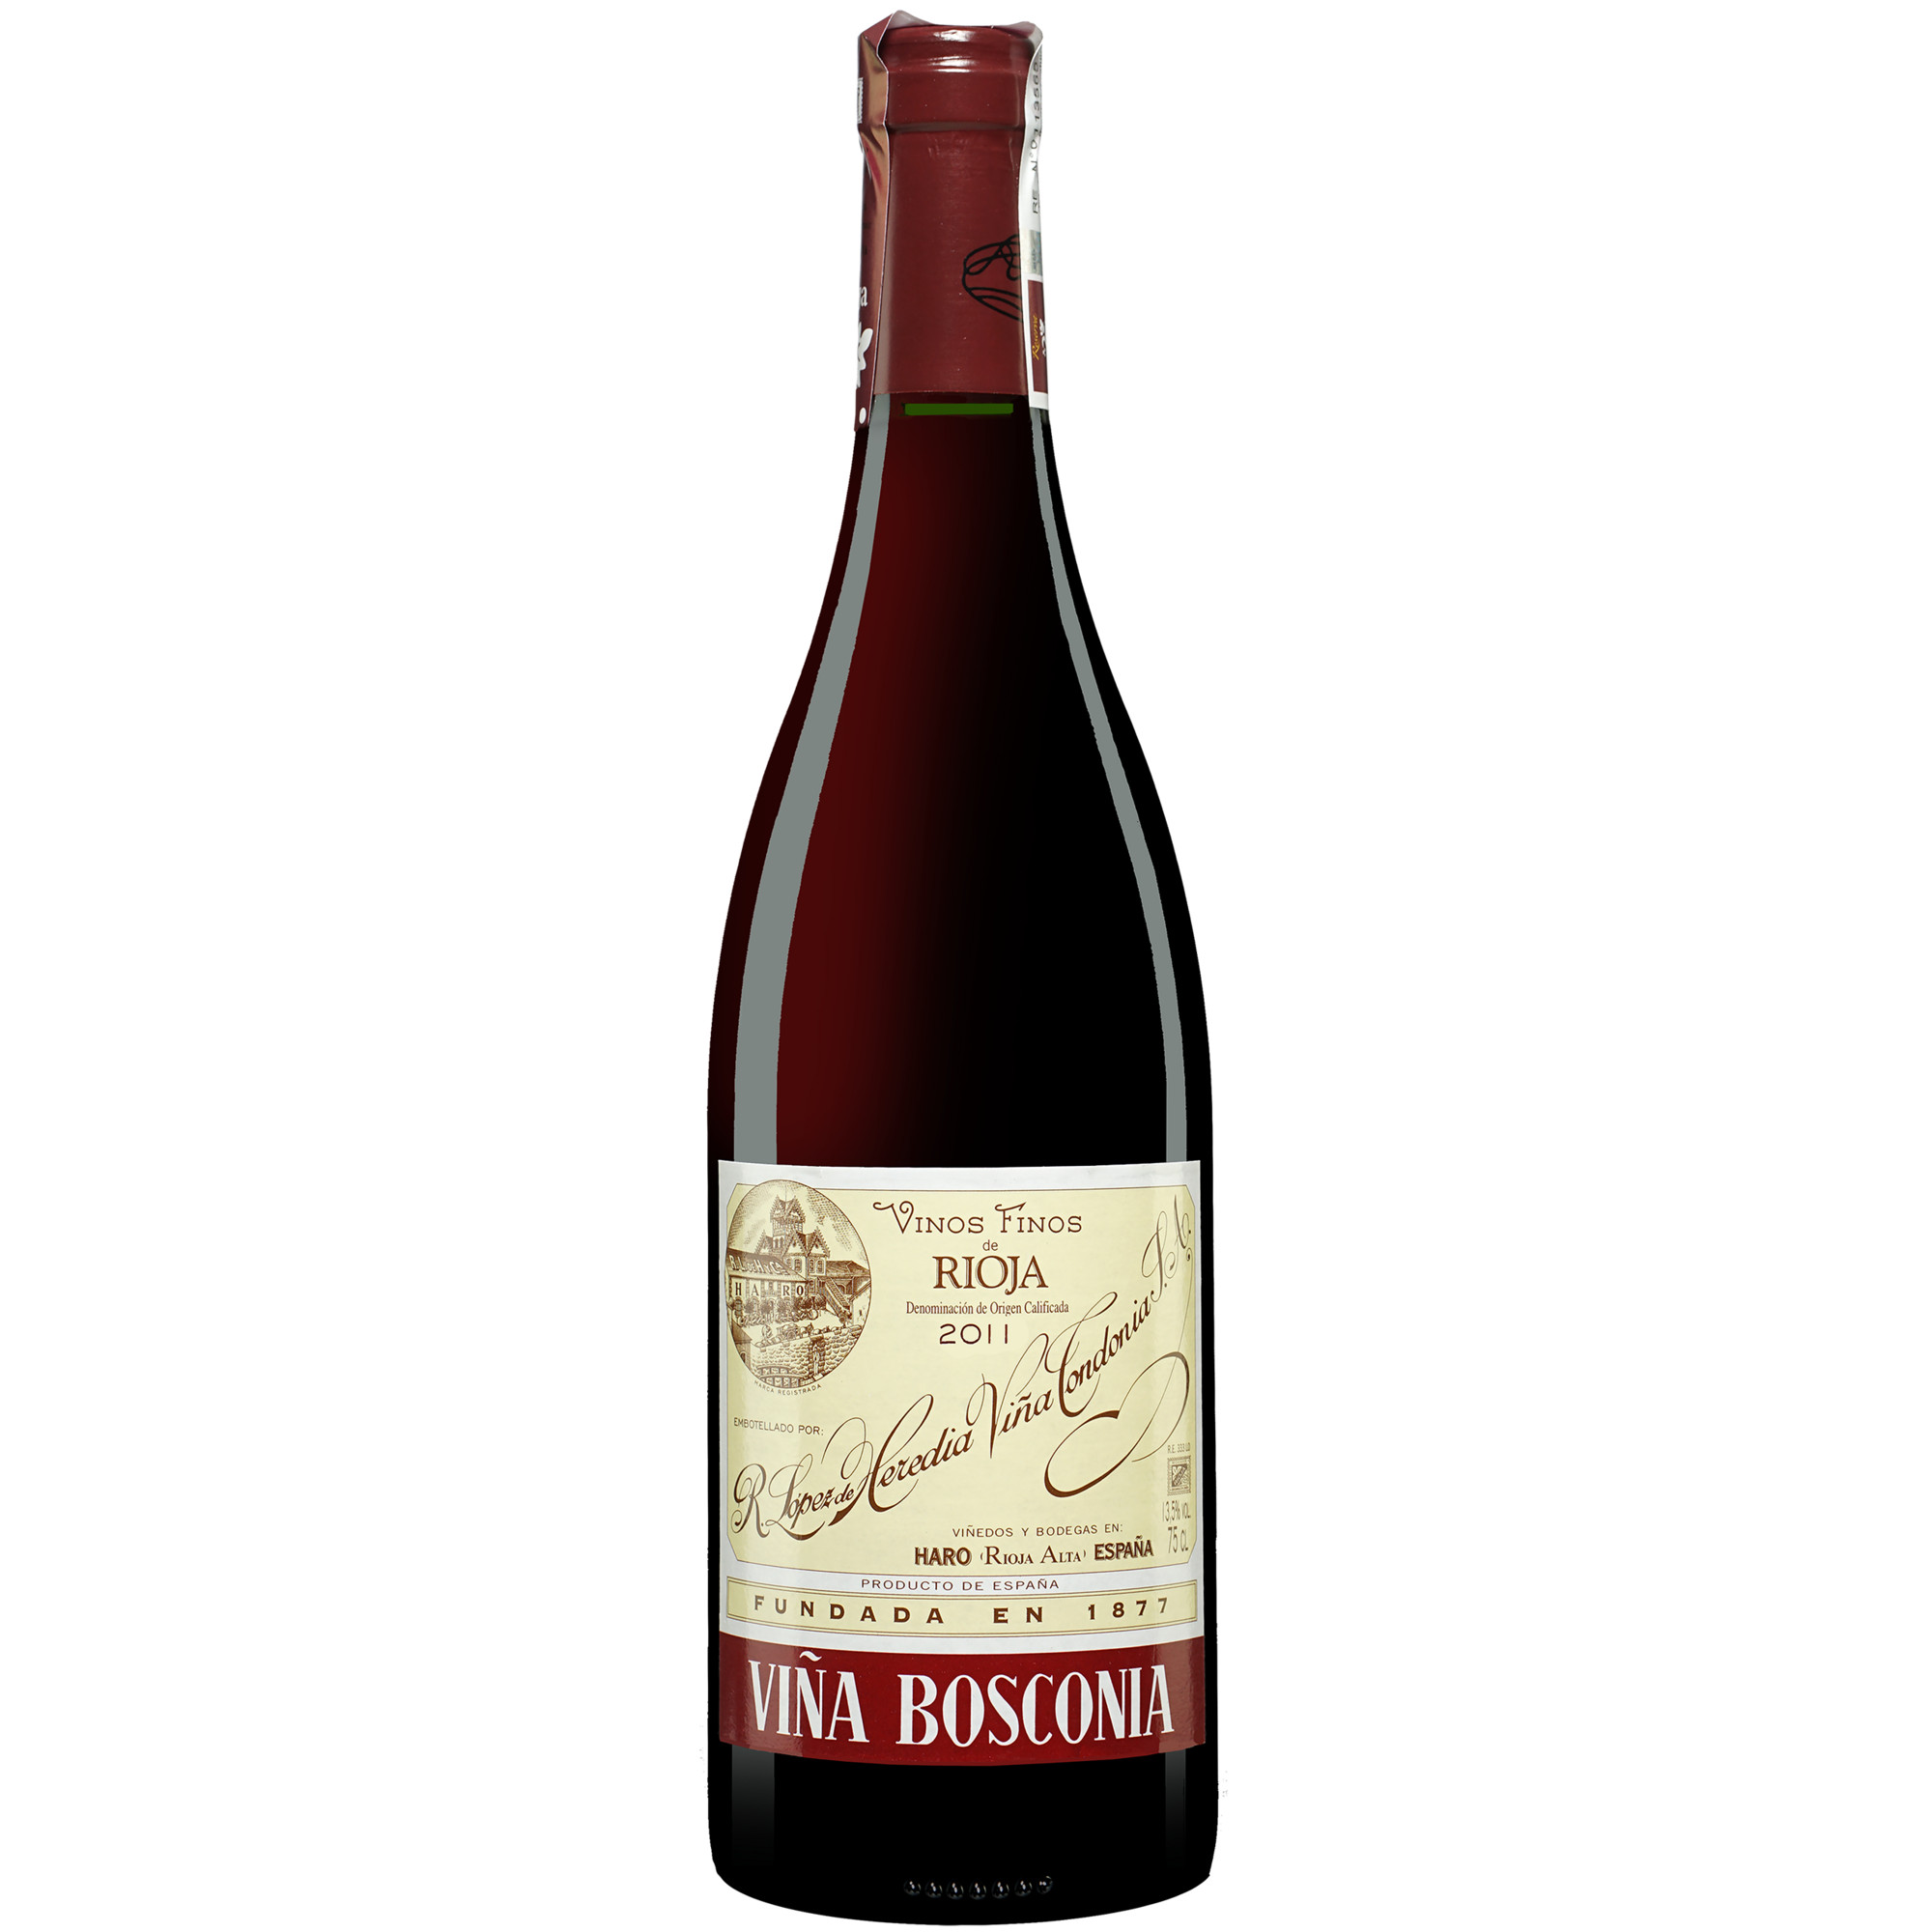 Tondonia »Viña Bosconia« Tinto Reserva 2011  0.75L 13.5% Vol. Rotwein Trocken aus Spanien Rotwein 36053 vinos DE